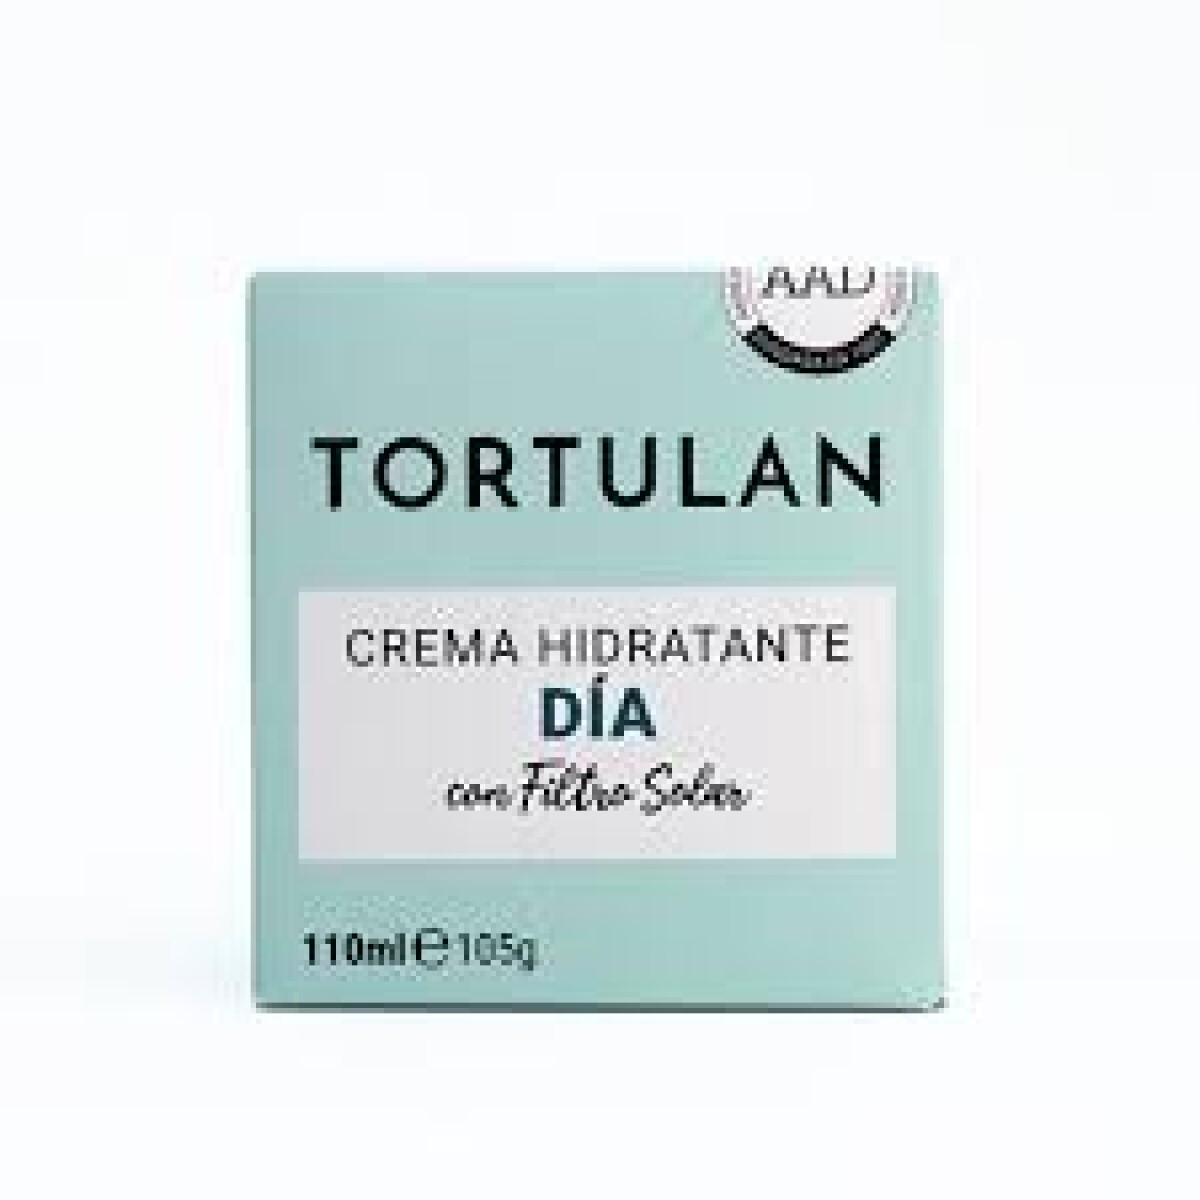 Tortulan Crema Hidratante - Nutritiva Dìa Con Filtro Solar 110ml 